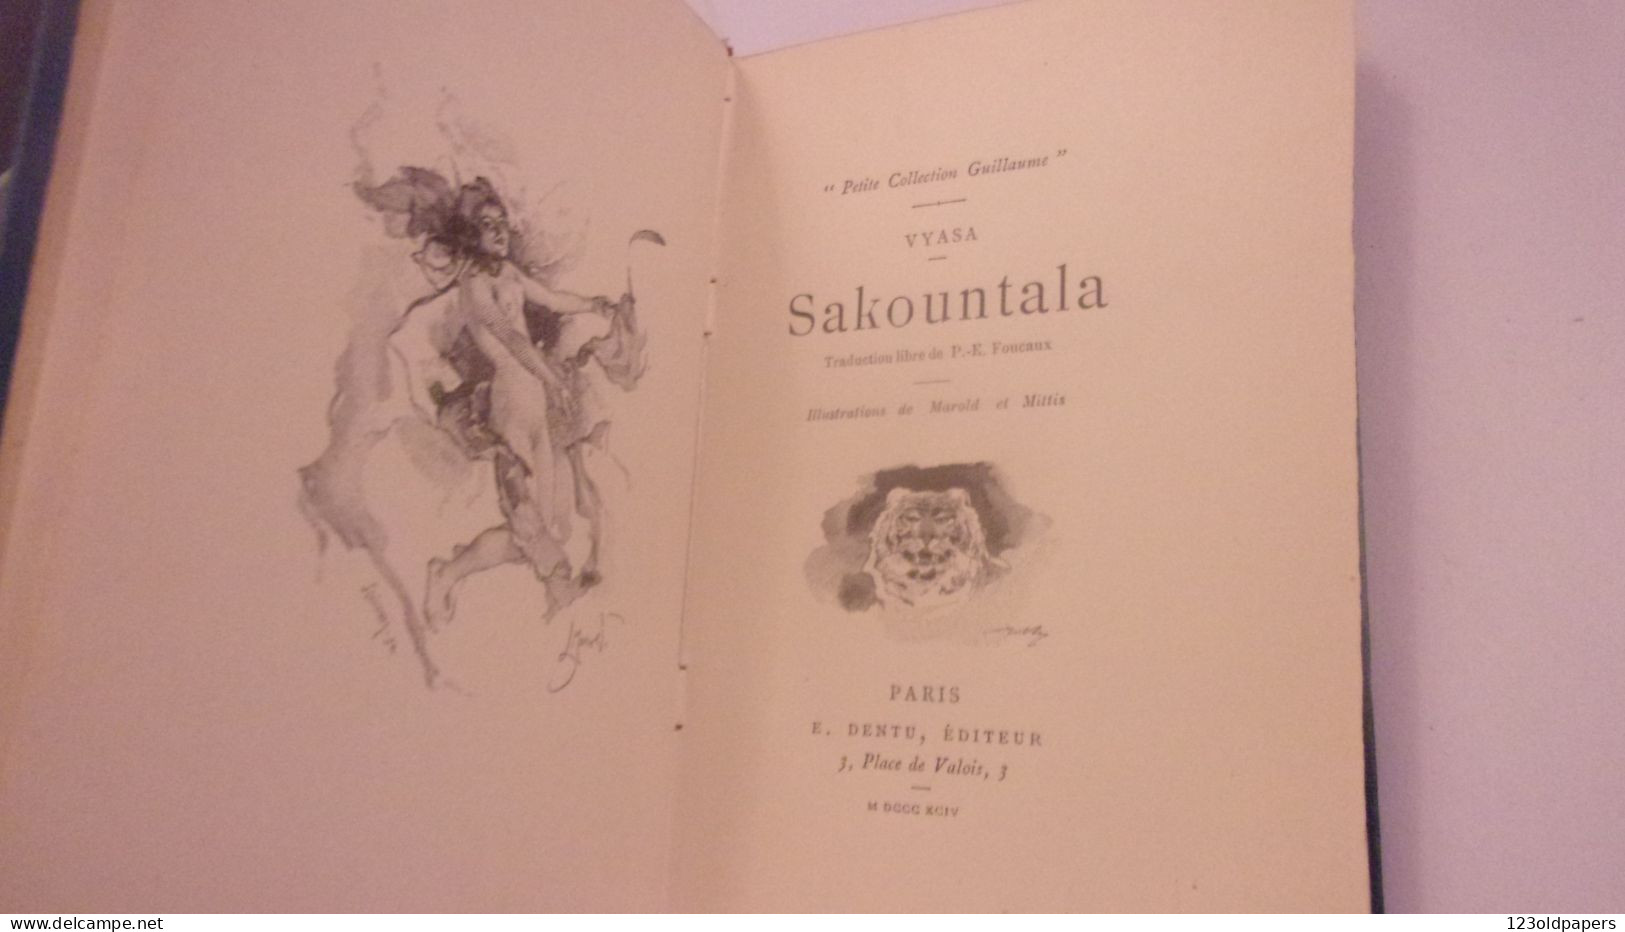 1894 PETITE COLLECTION GUILLAUME VYASA SAKOUNTALA  DENTU EDIT ESOTERISME - 1801-1900